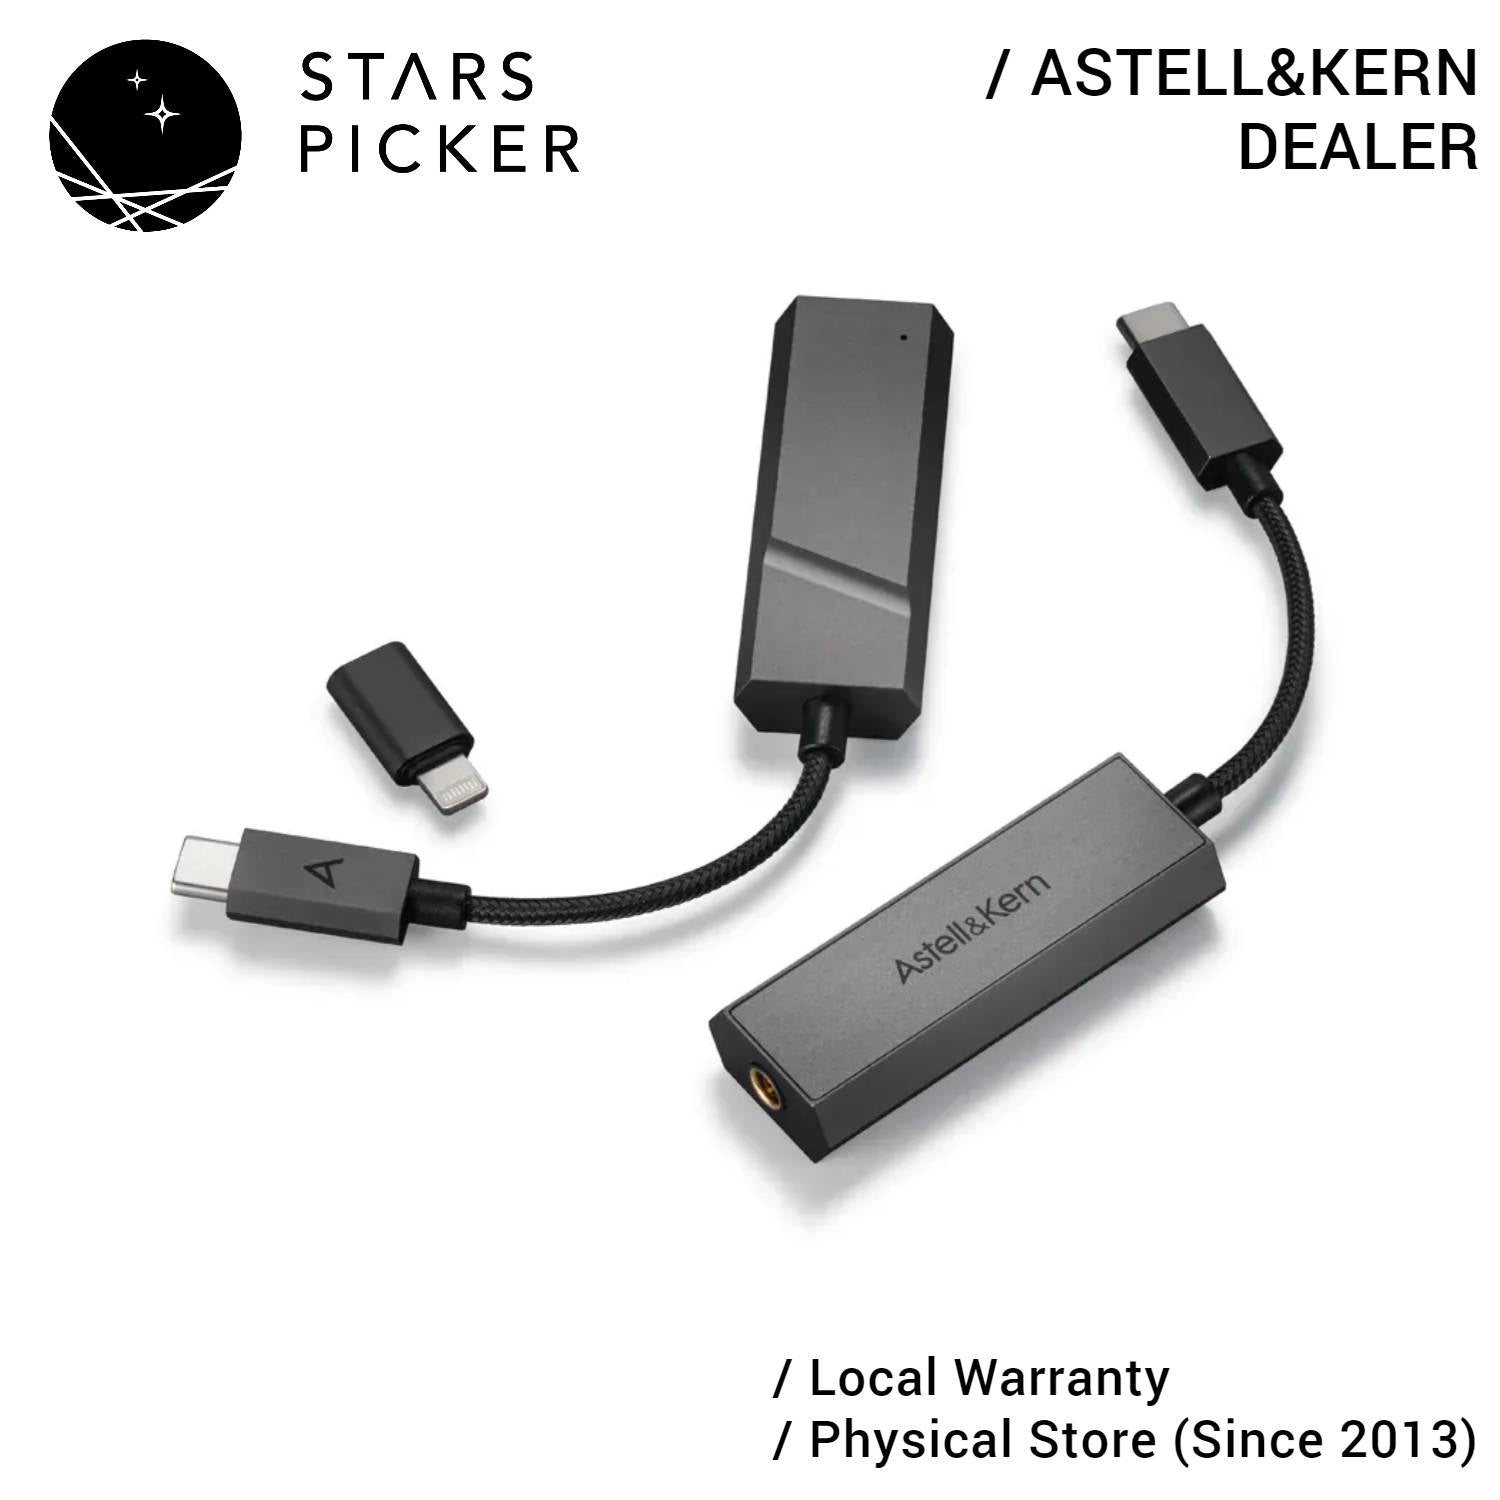 Astell&Kern AK HC2 (2022) Hi-Fi Cirrus Logic CS43198 Dual DAC Cable Roon Tested PCM 32bit 384kHz Native DSD